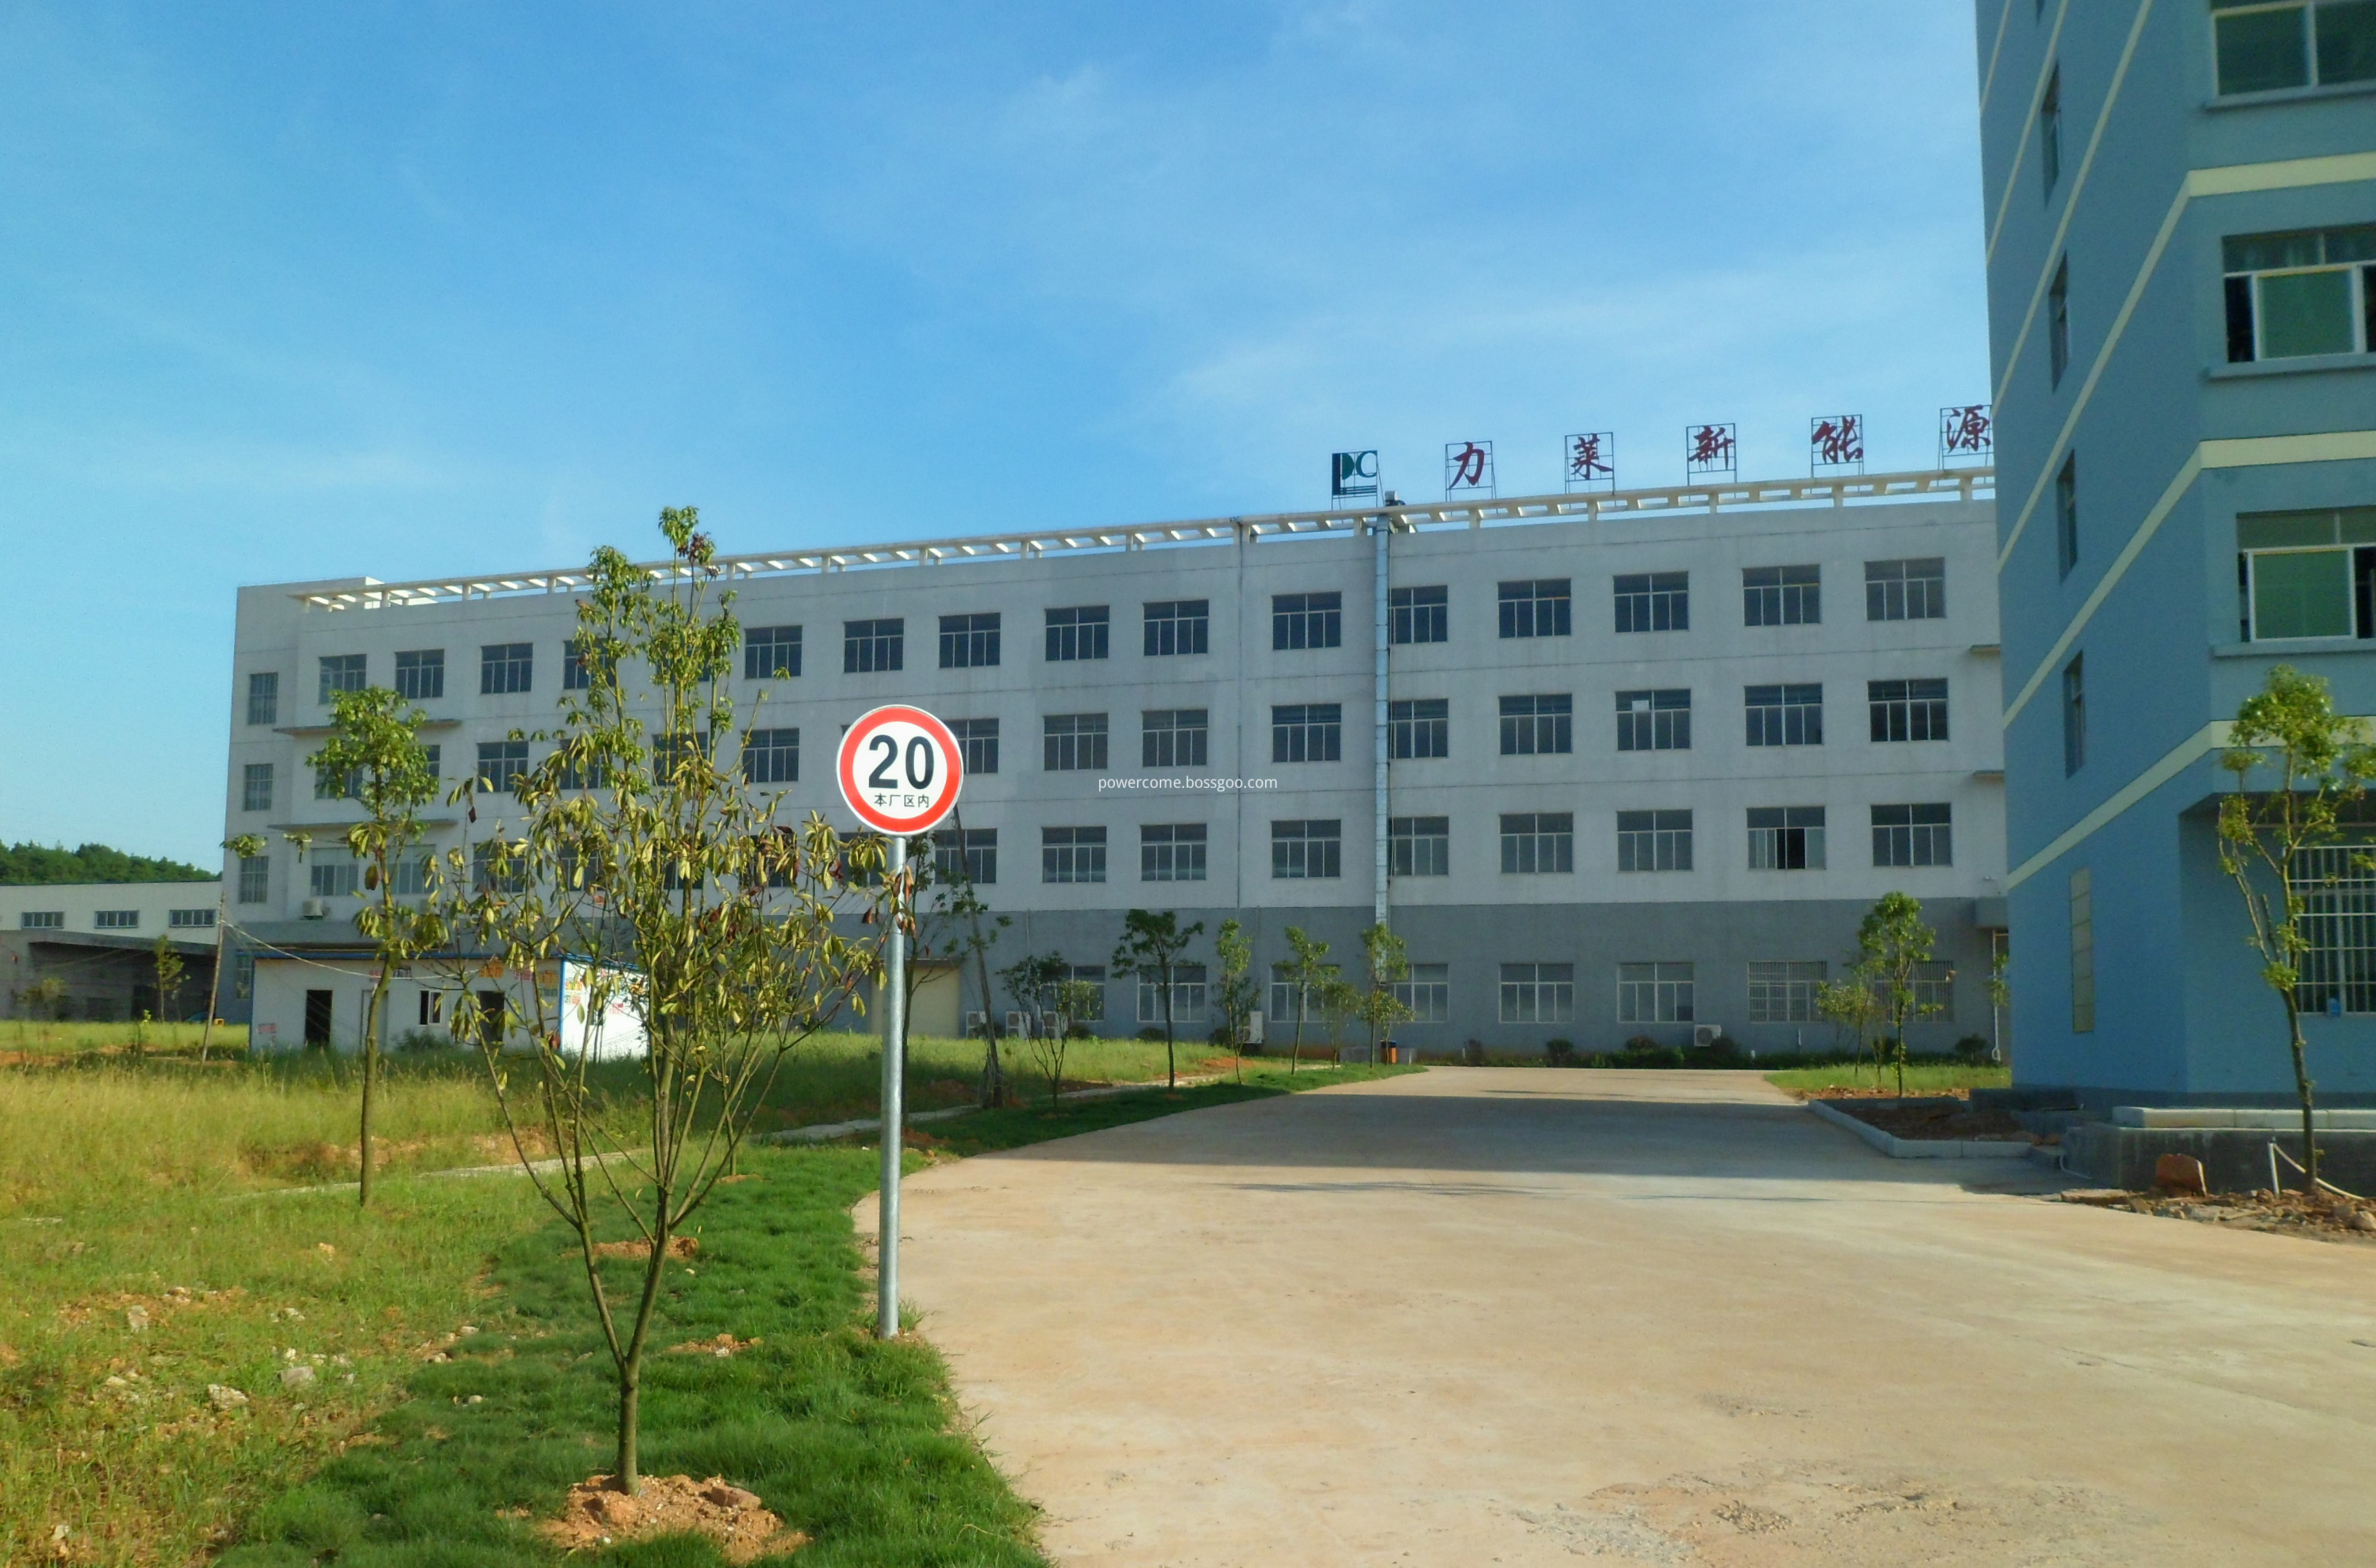 Factory Powercom